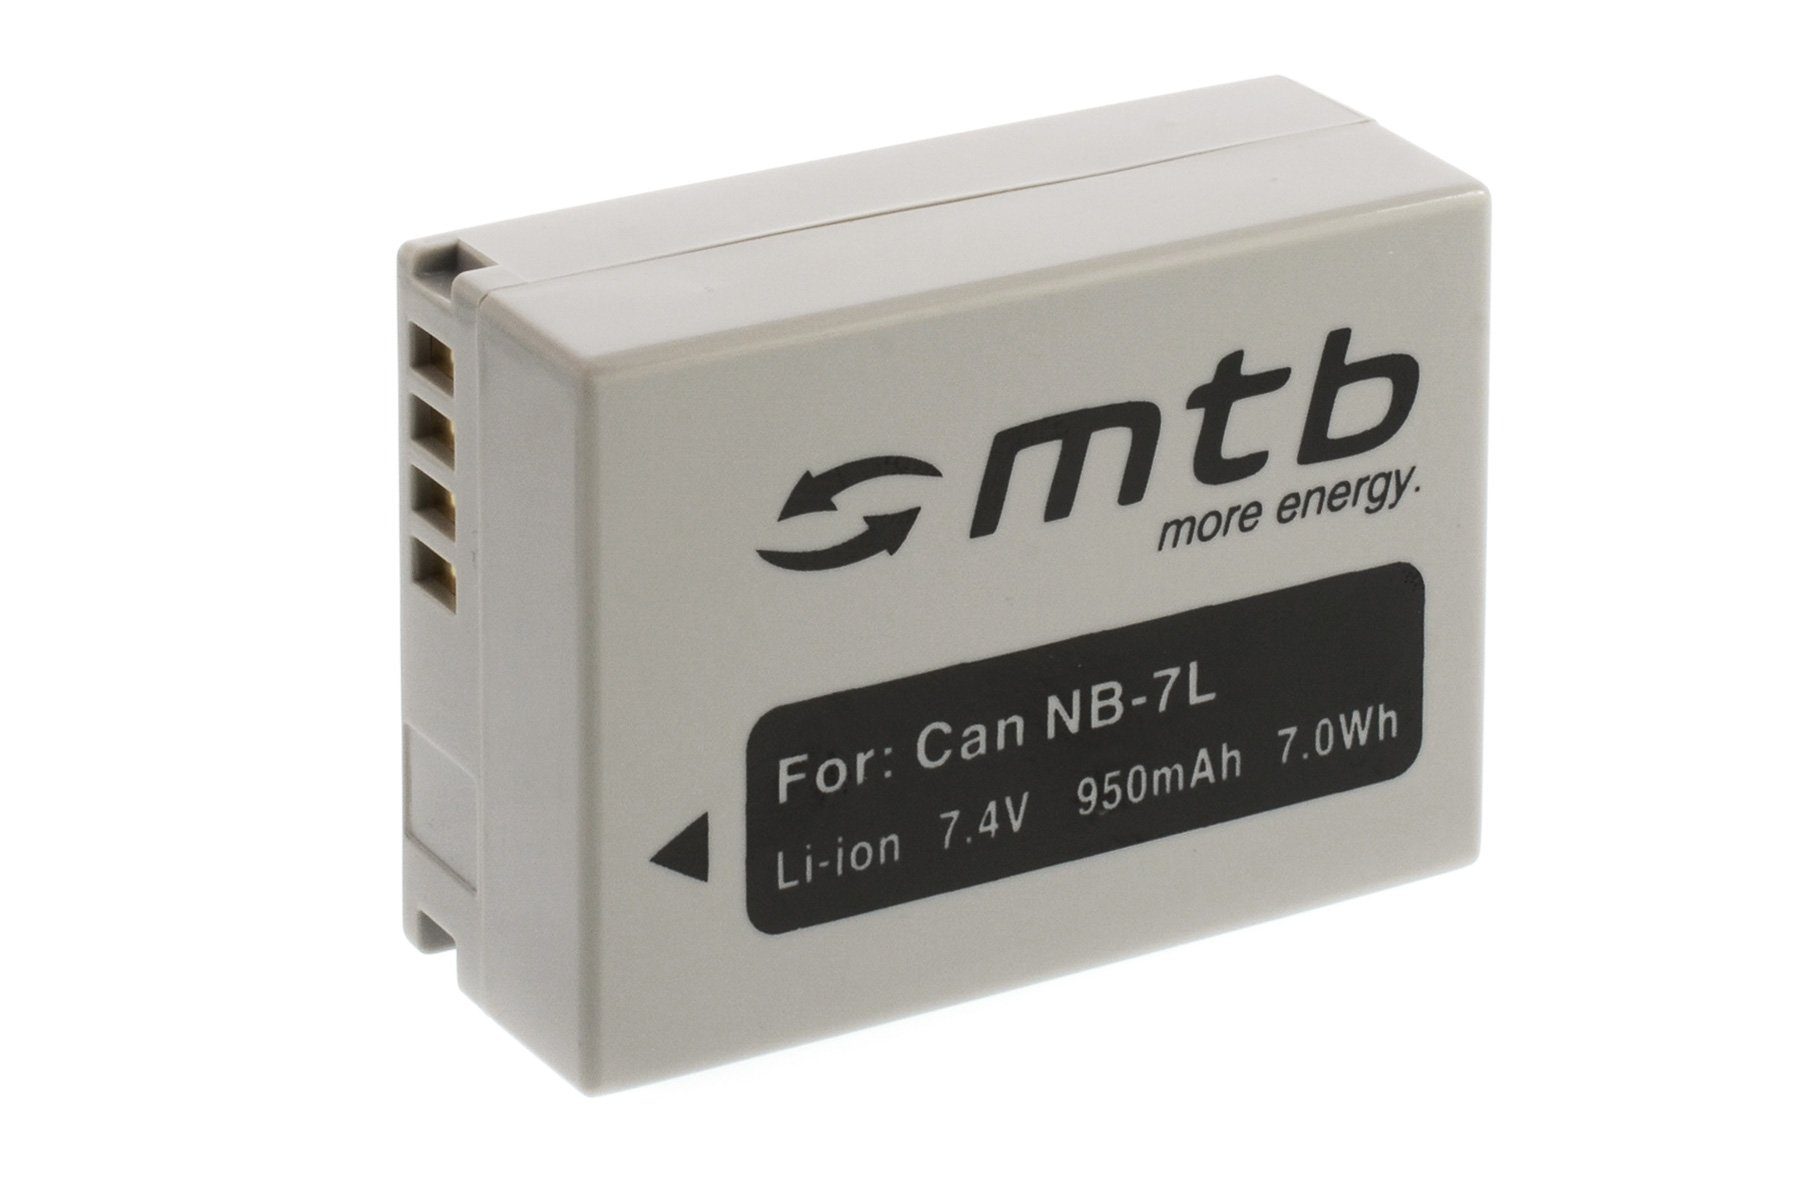 mtb more PowerShot energy IS… Li-Ion] (7,4 G12, [BAT-158 - Akku-Typ 950 NB-7L Kamera-Akku V), mAh G11, für: G10, kompatibel mit passend Canon SX30 Canon